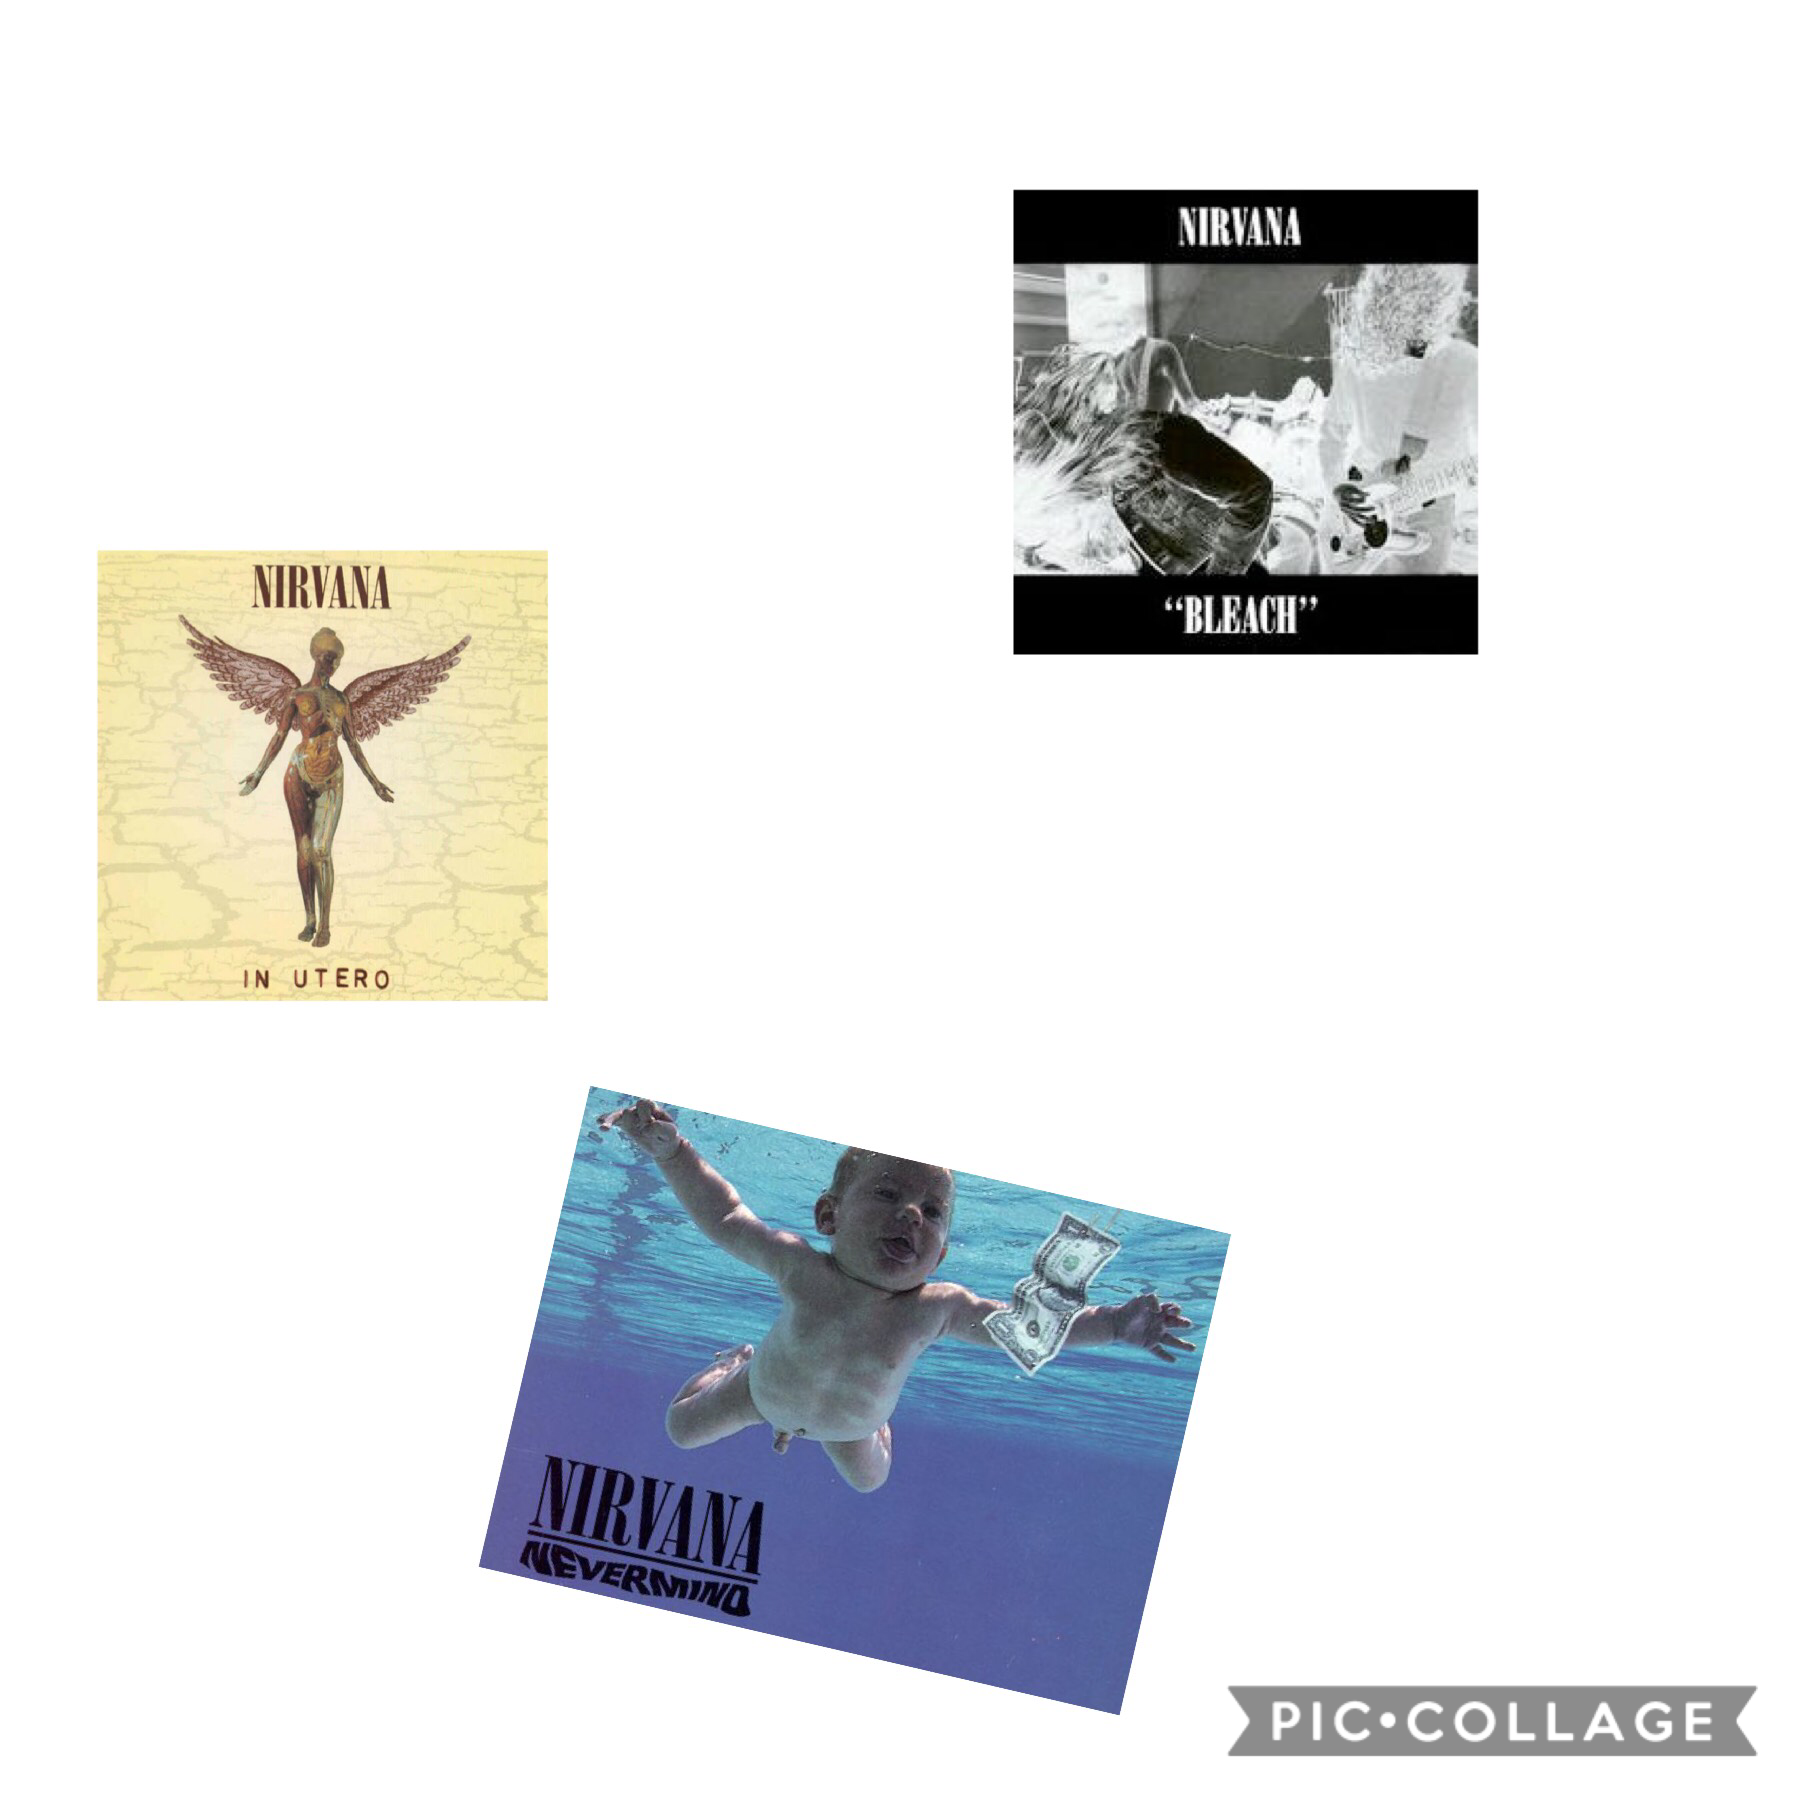 Nirvana albums